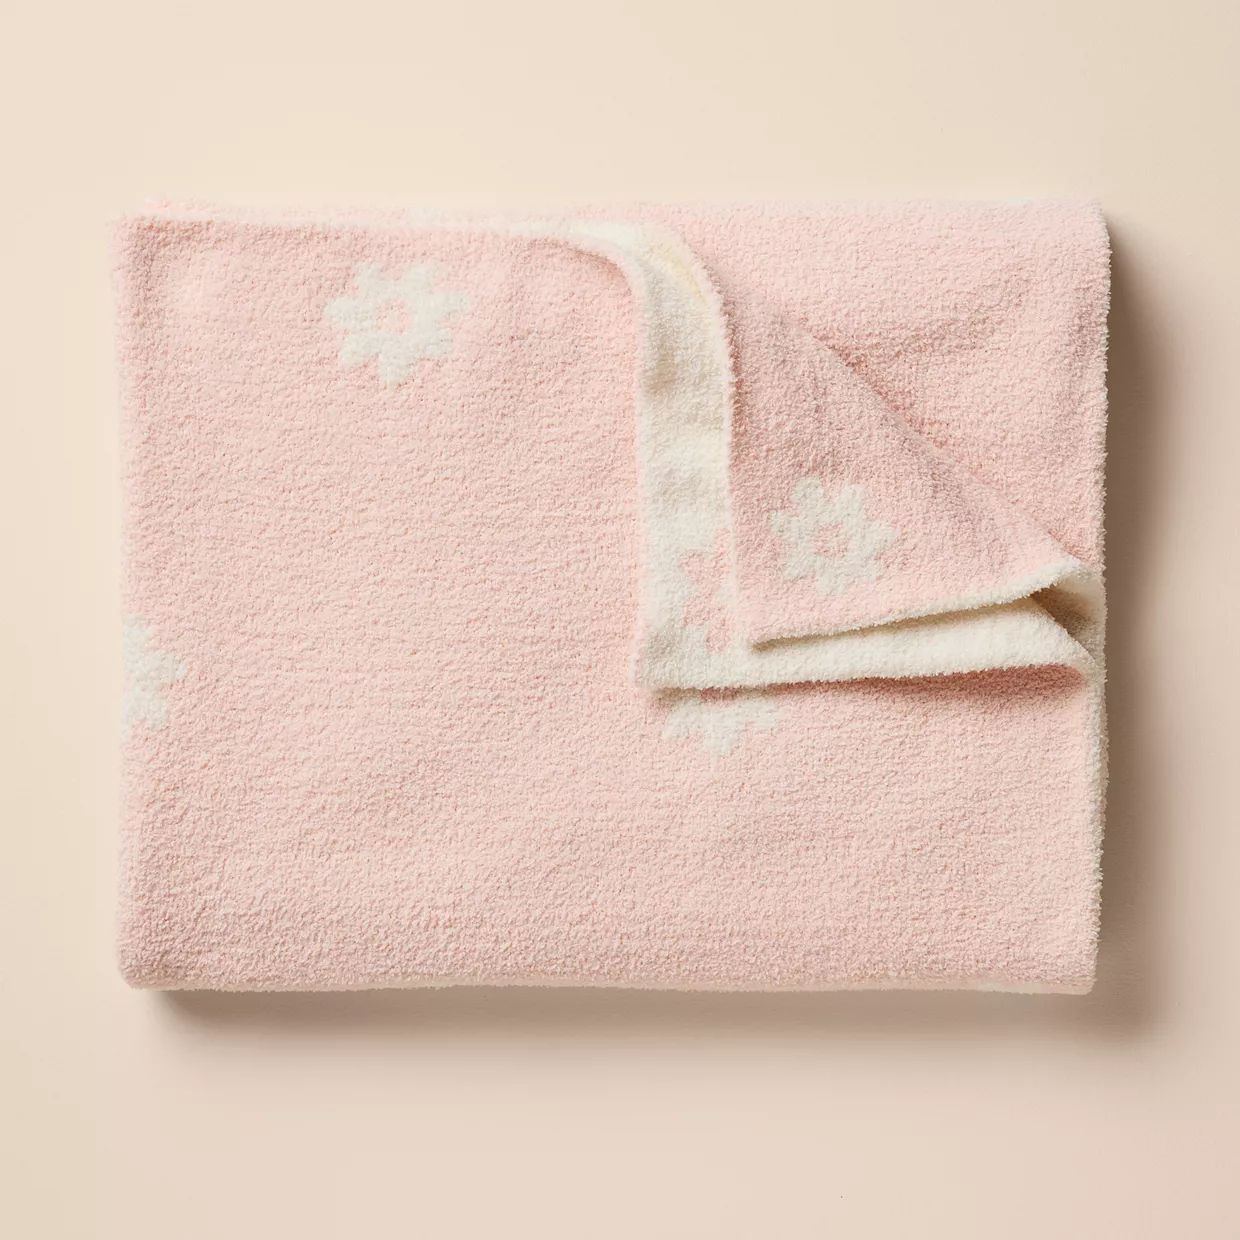 Little Co. by Lauren Conrad Cozy Knit Throw Blanket | Kohl's